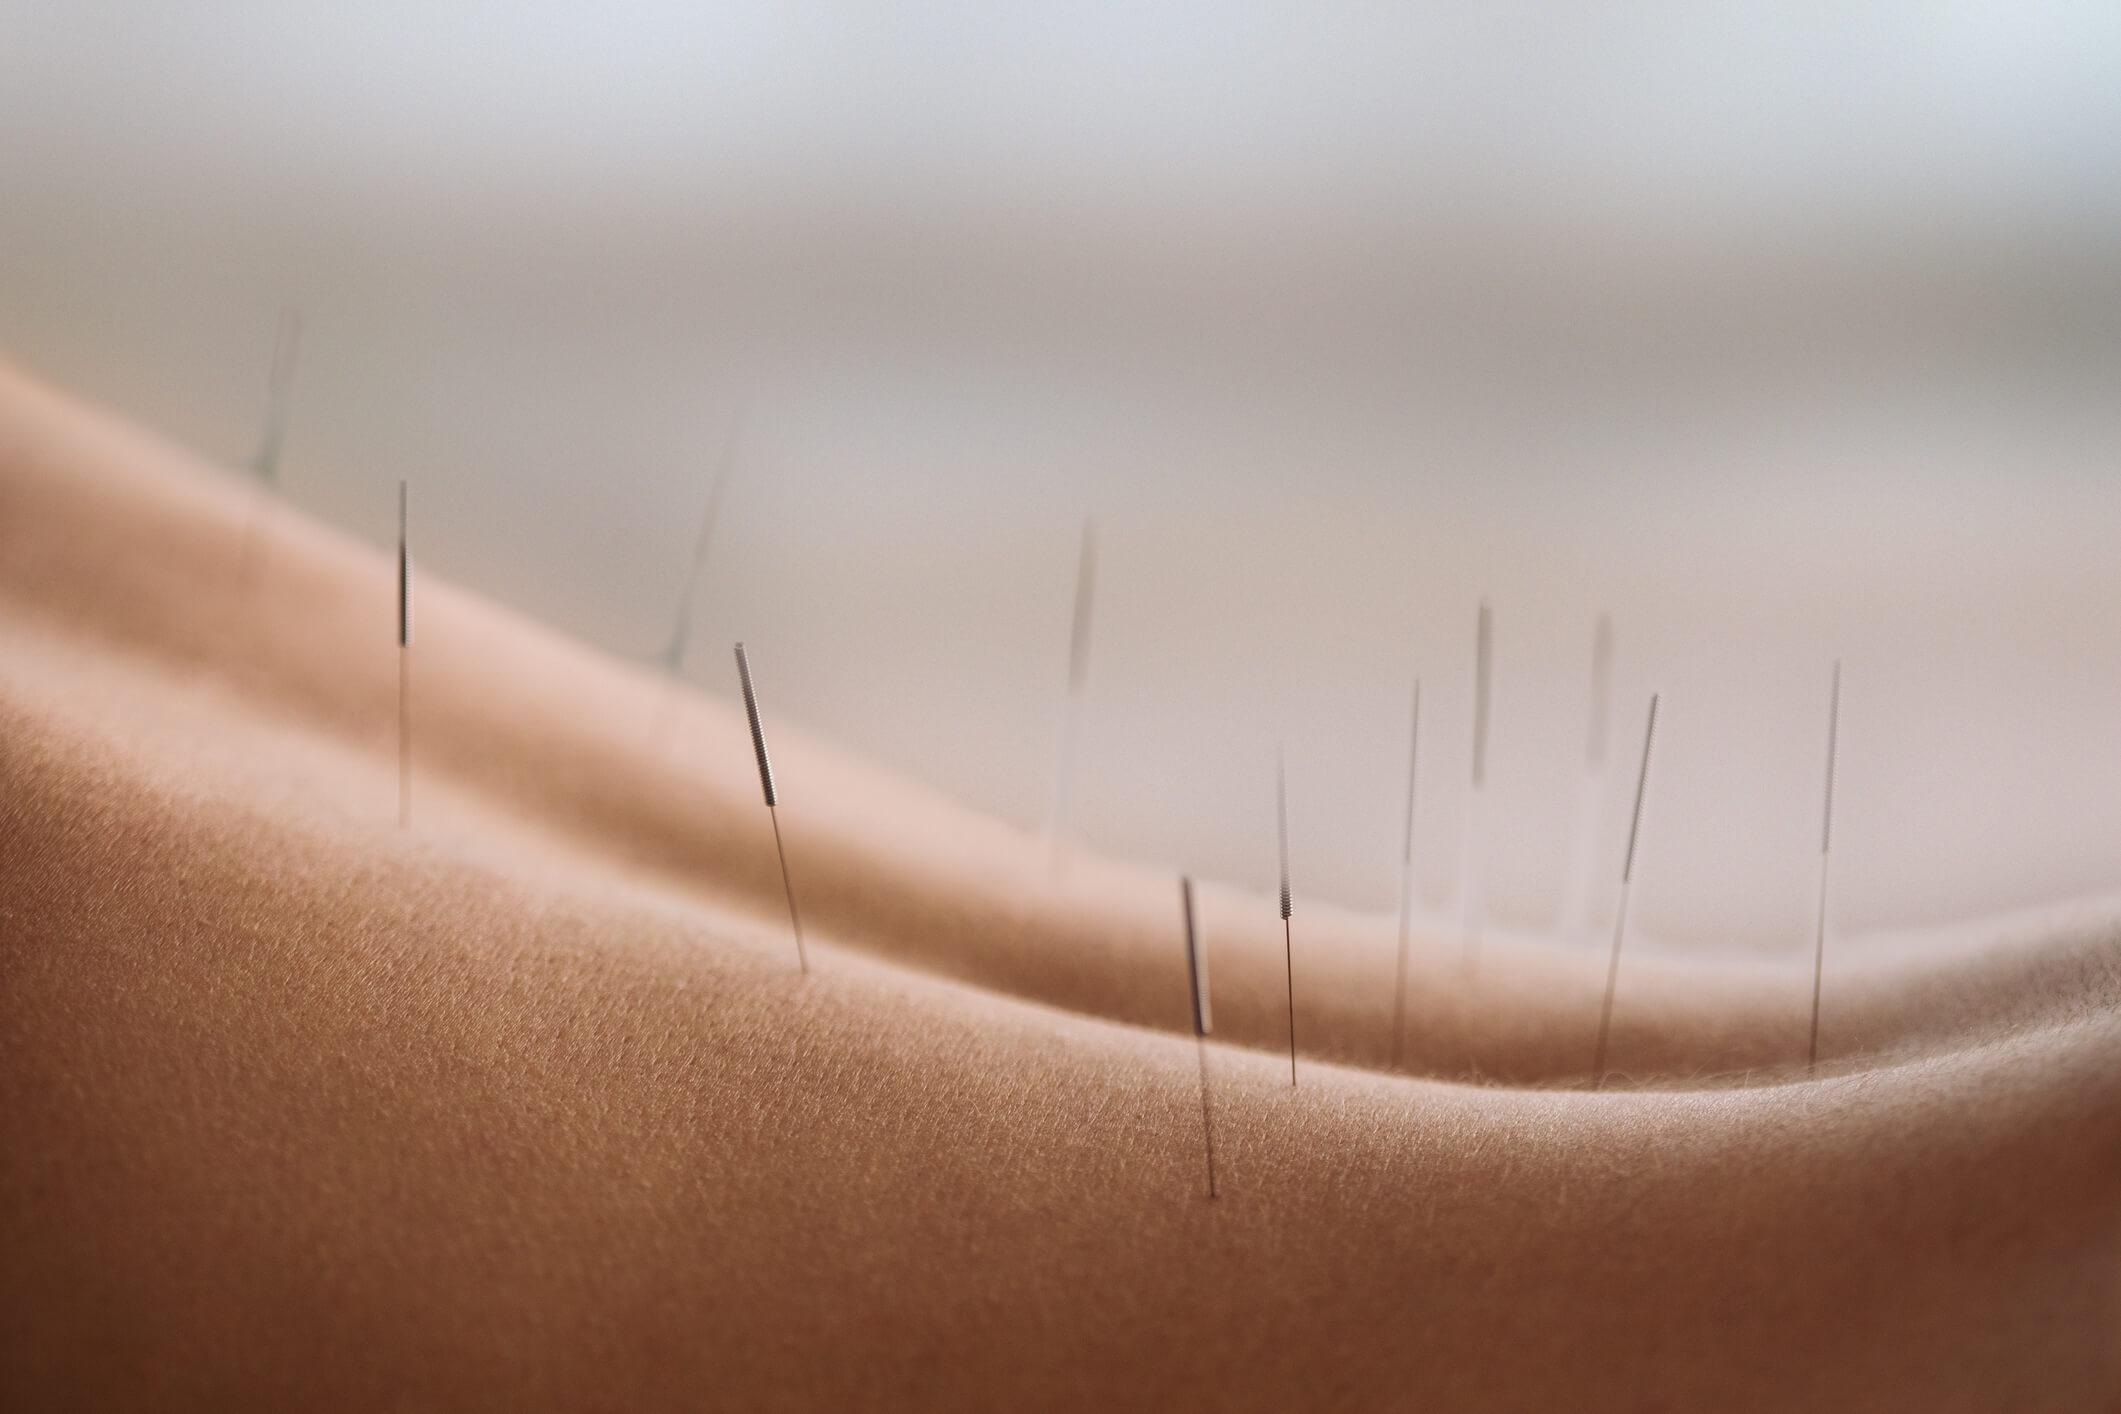 Rückenbehandlung mit Akupunktur